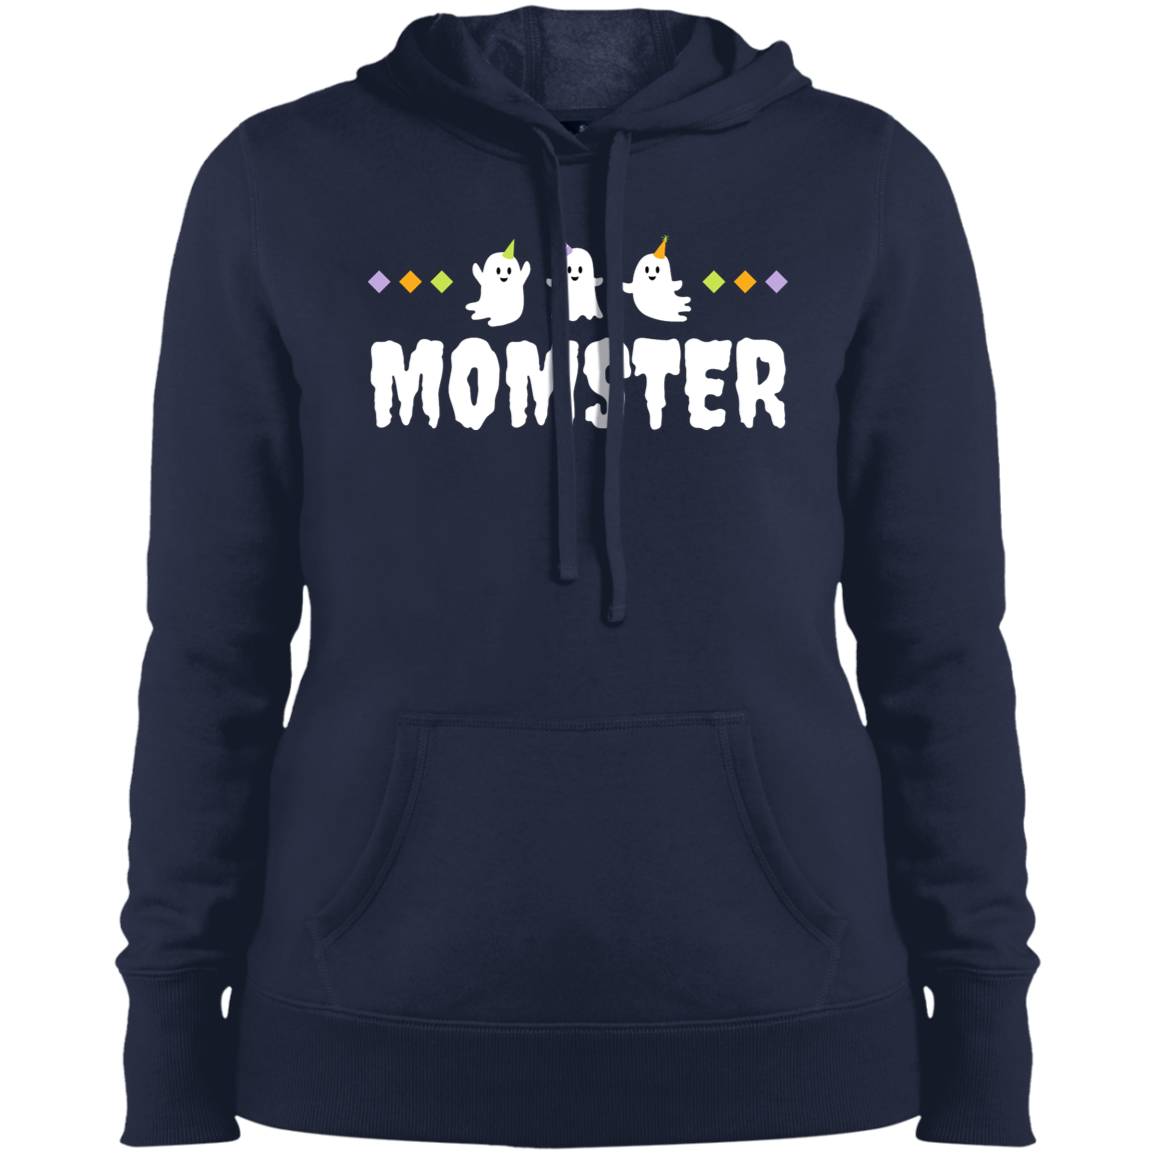 "Momster" Halloween Ghost Pullover Hooded Sweatshirt